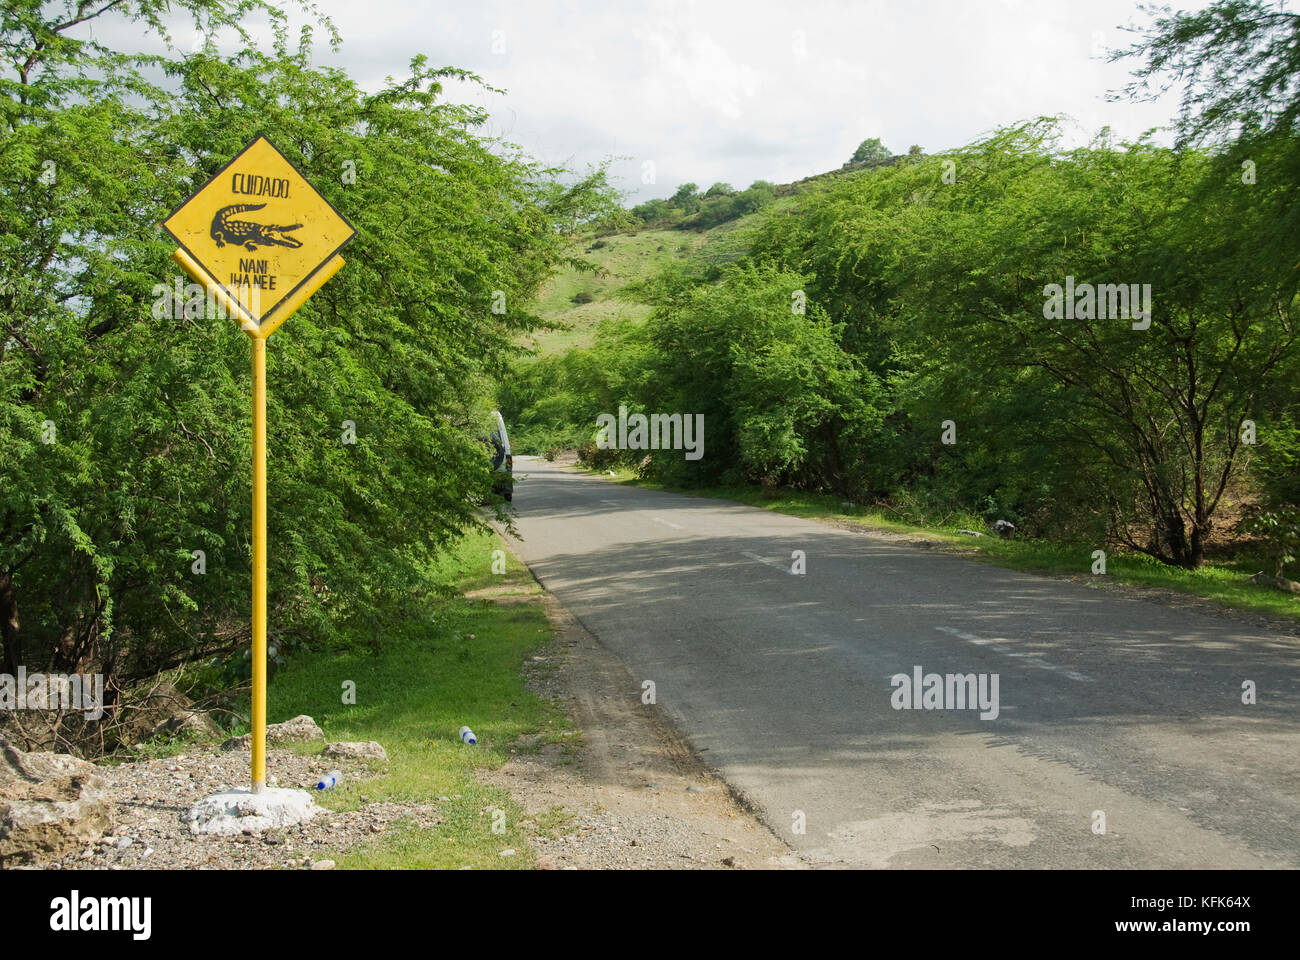 Crocodile crossing sign on the road from Dili to Baucau, Timor-Leste (East Timor). Saltwater crocodiles, Crocodylus porosus, are common in this area. Stock Photo